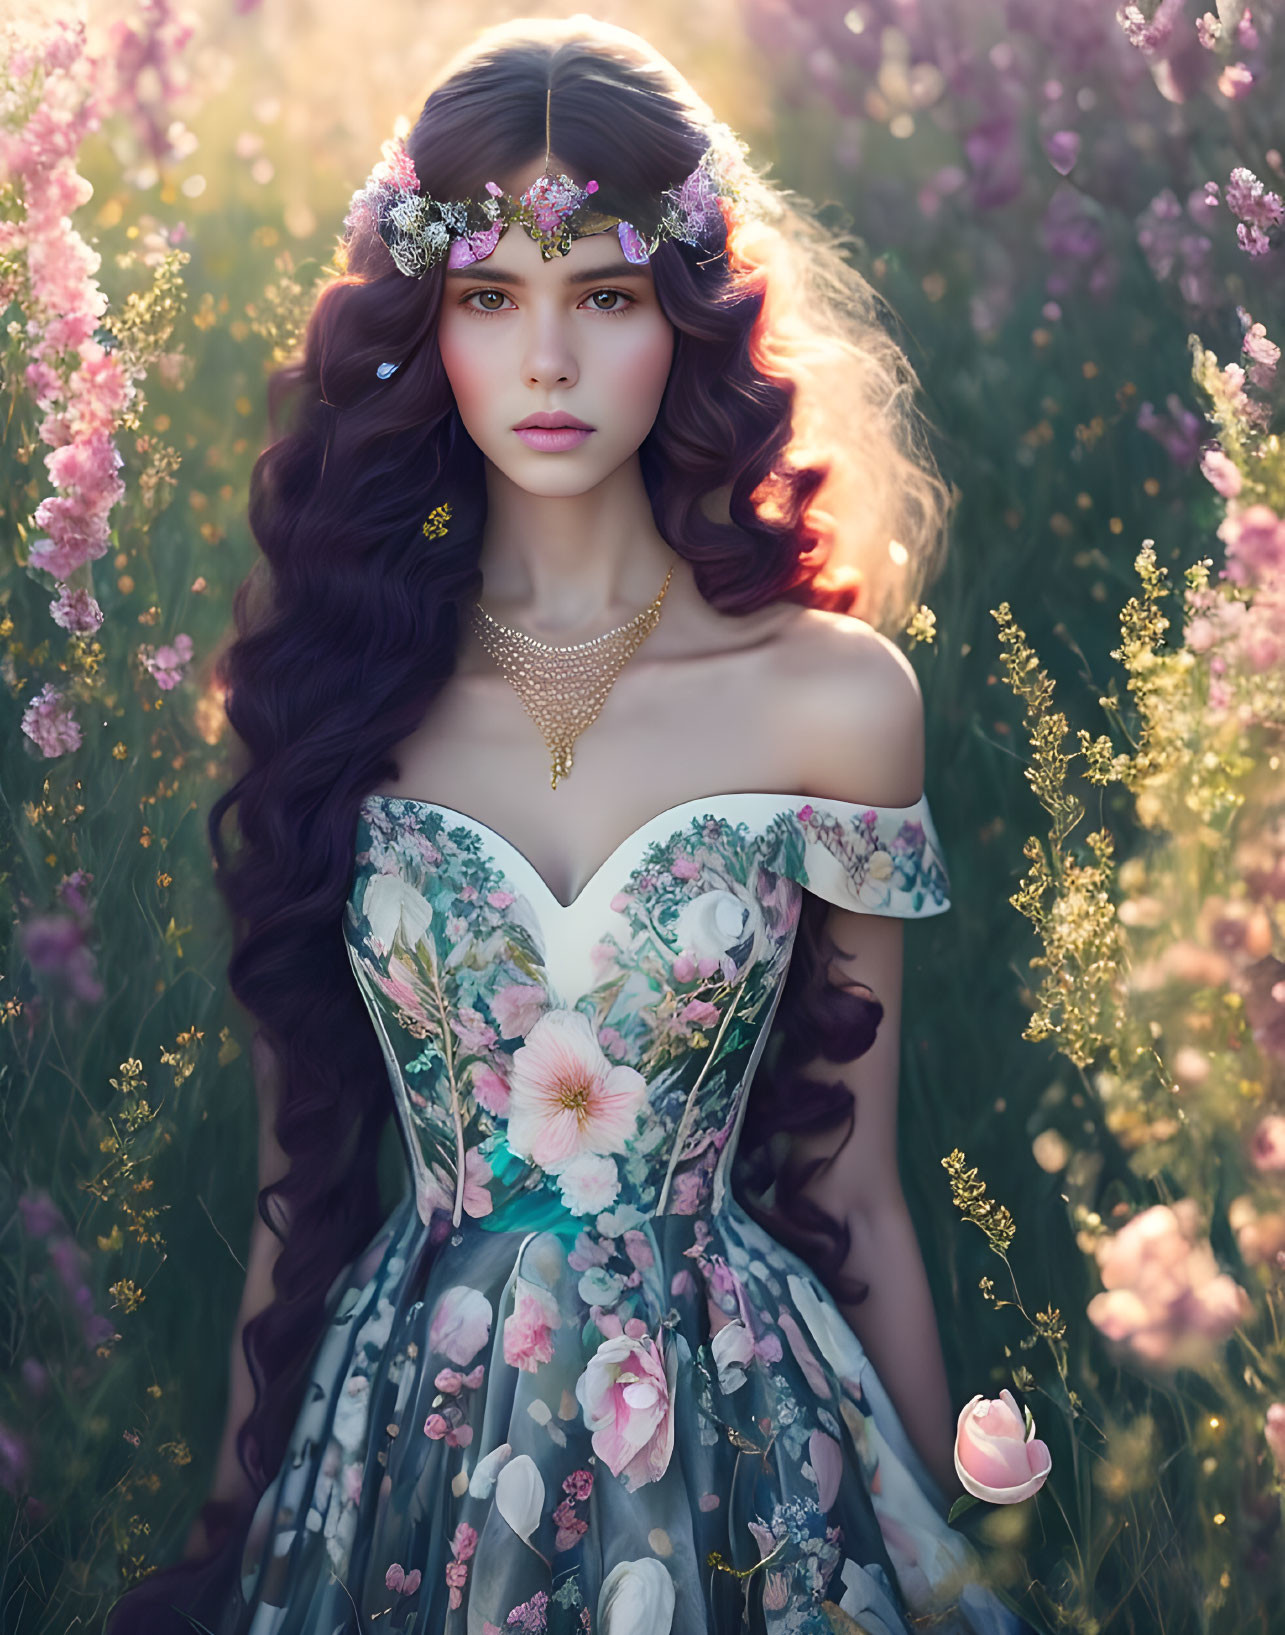 Digital artwork: Woman with long purple hair and floral tiara in flower-patterned dress in blooming